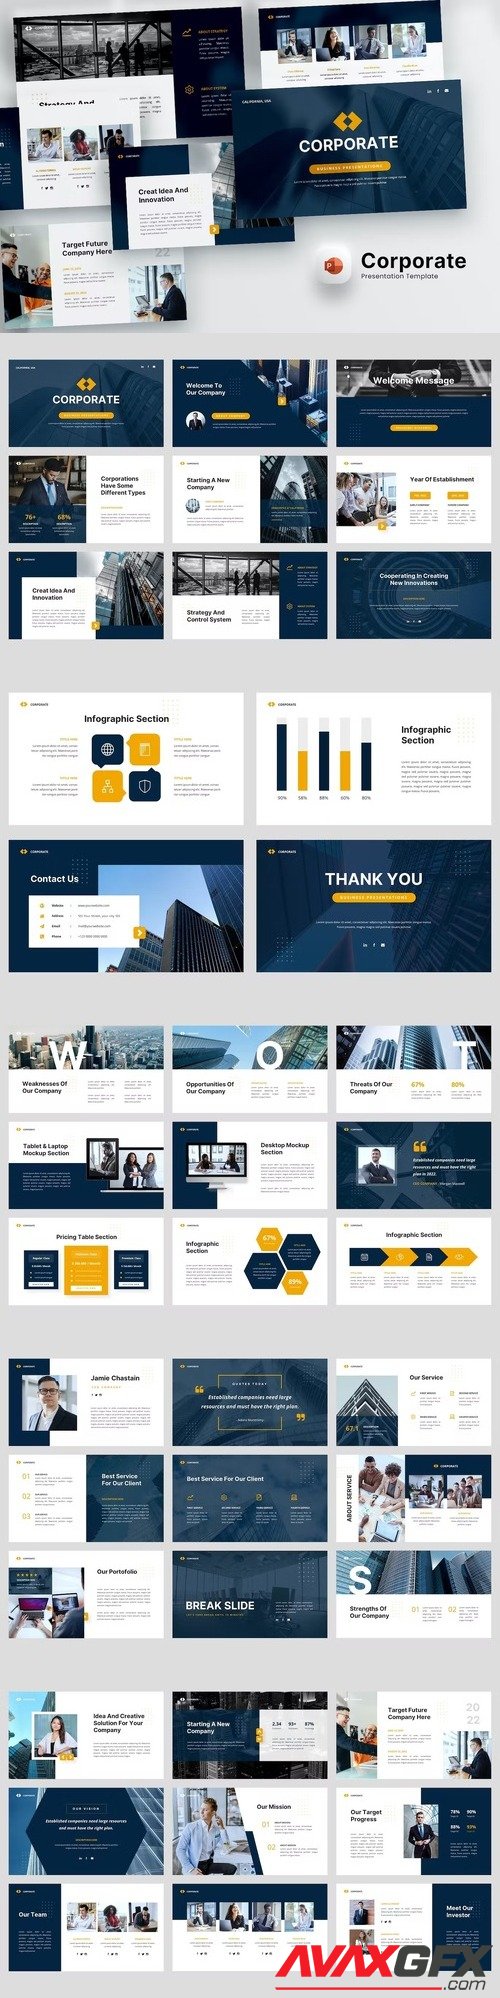 Corporate - Company Profile Powerpoint Template BJK7QGZ